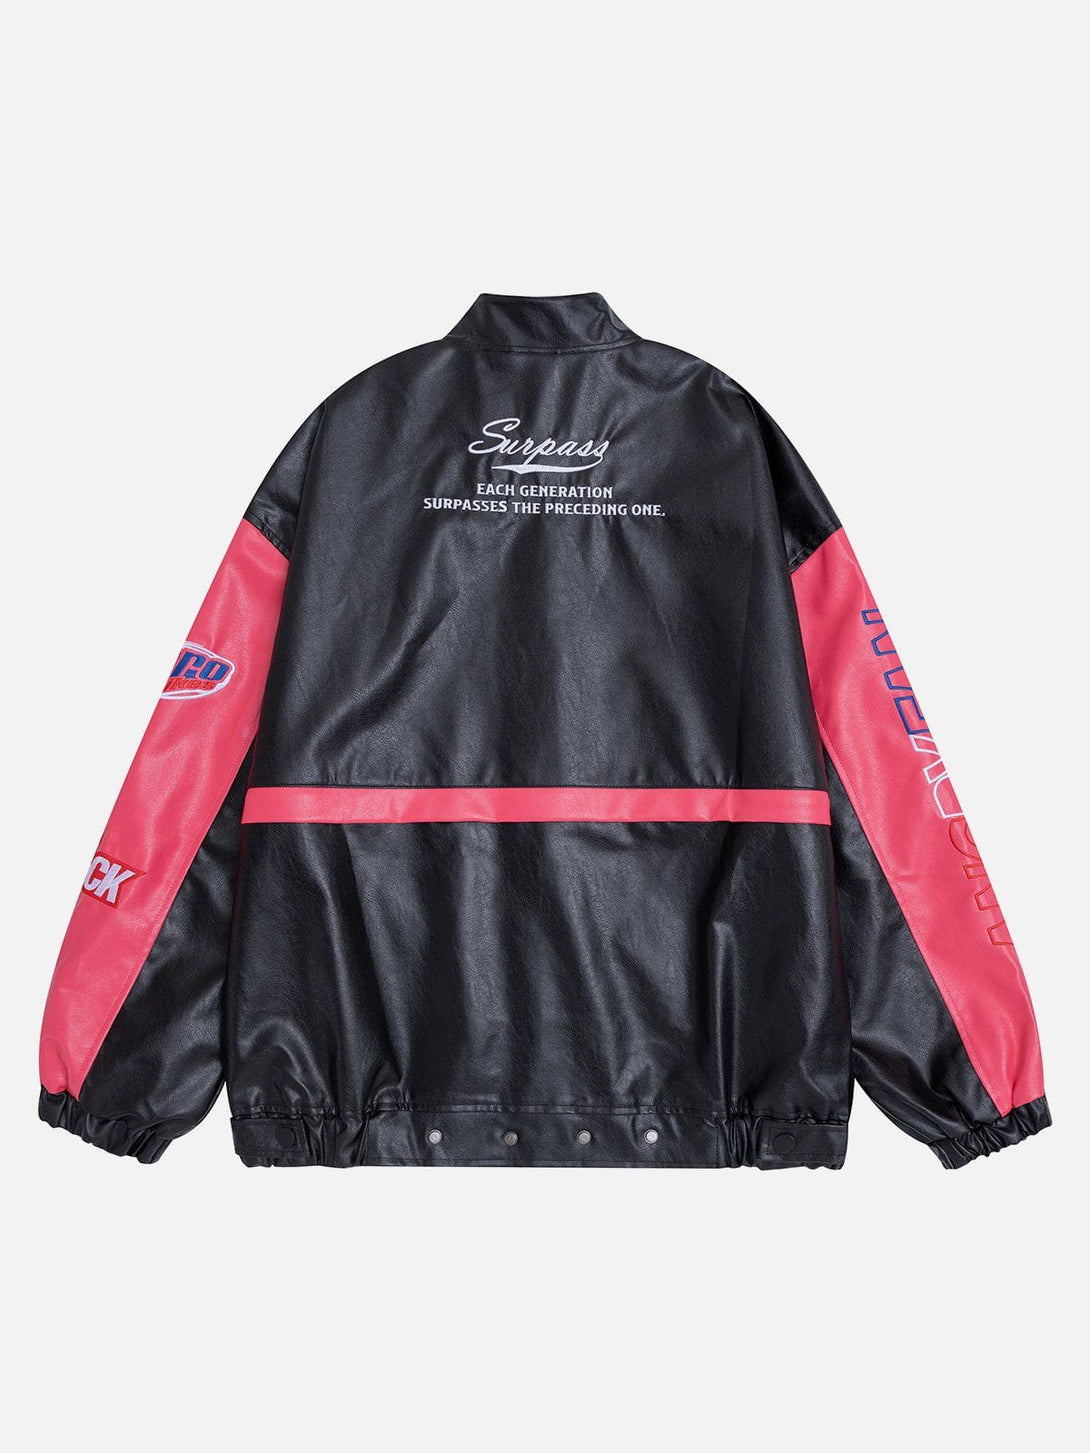 Levefly - Detachable Patchwork PU Jacket - Streetwear Fashion - levefly.com